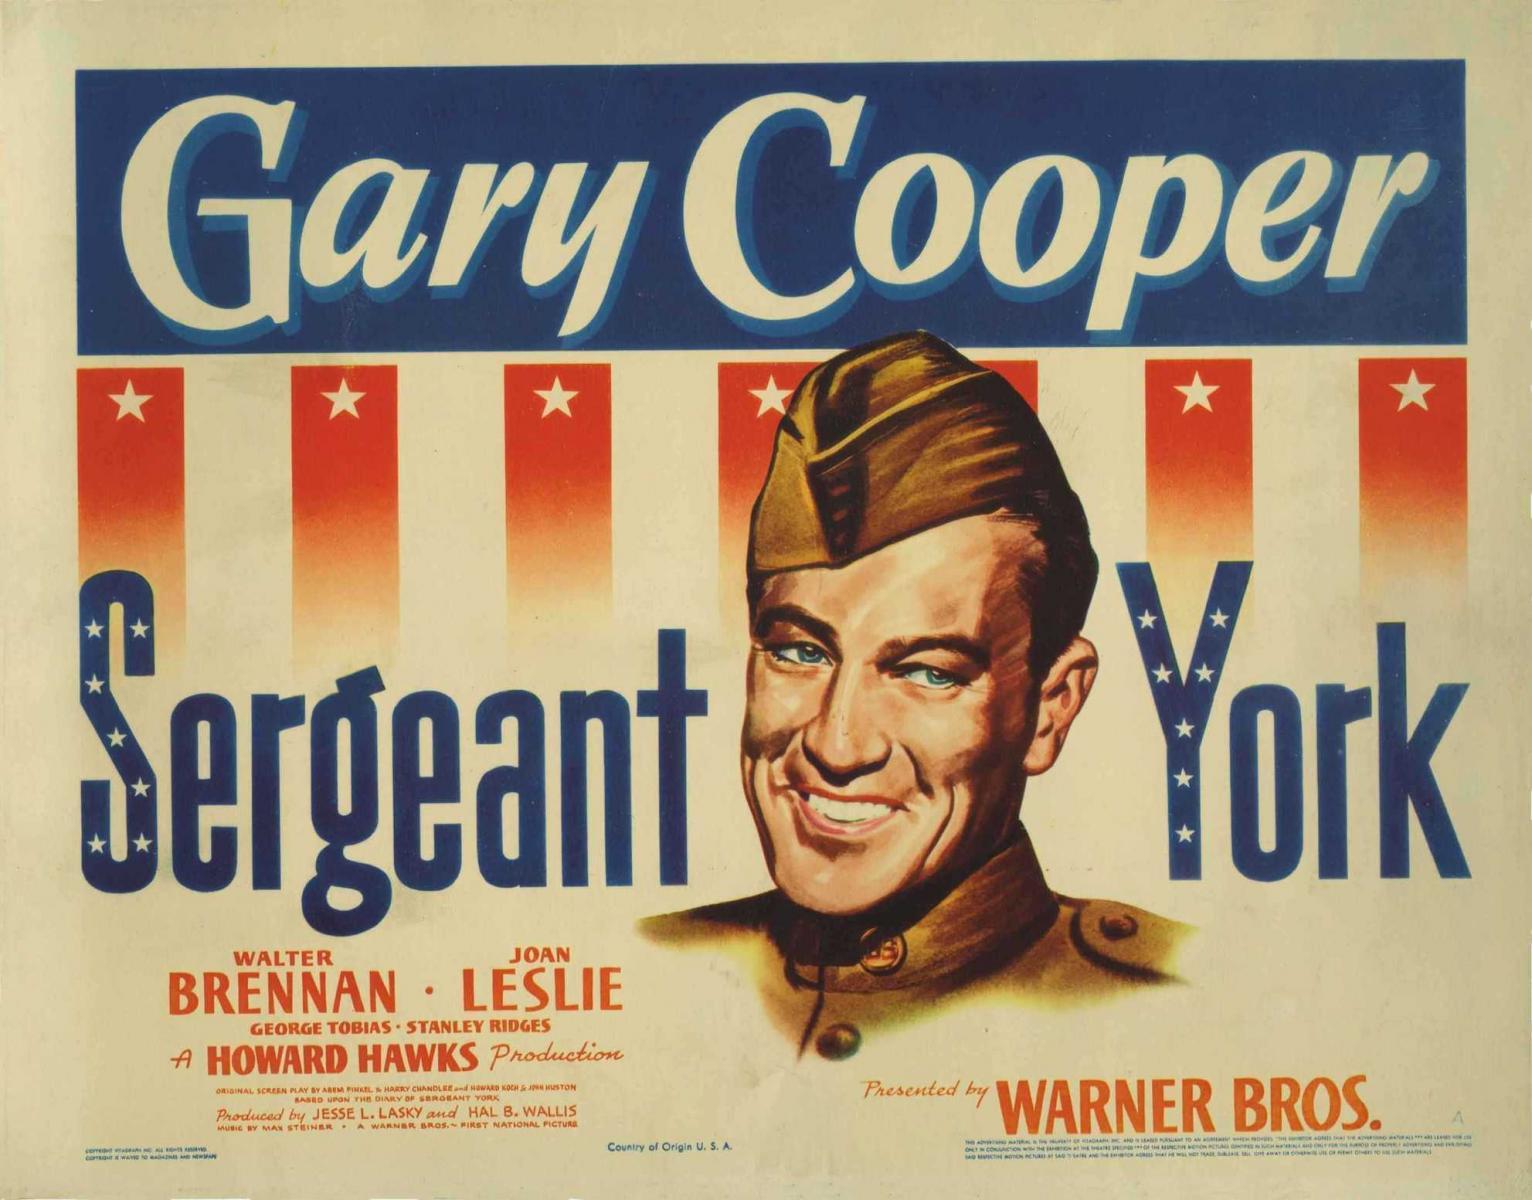 Image gallery for "Sergeant York " - FilmAffinity